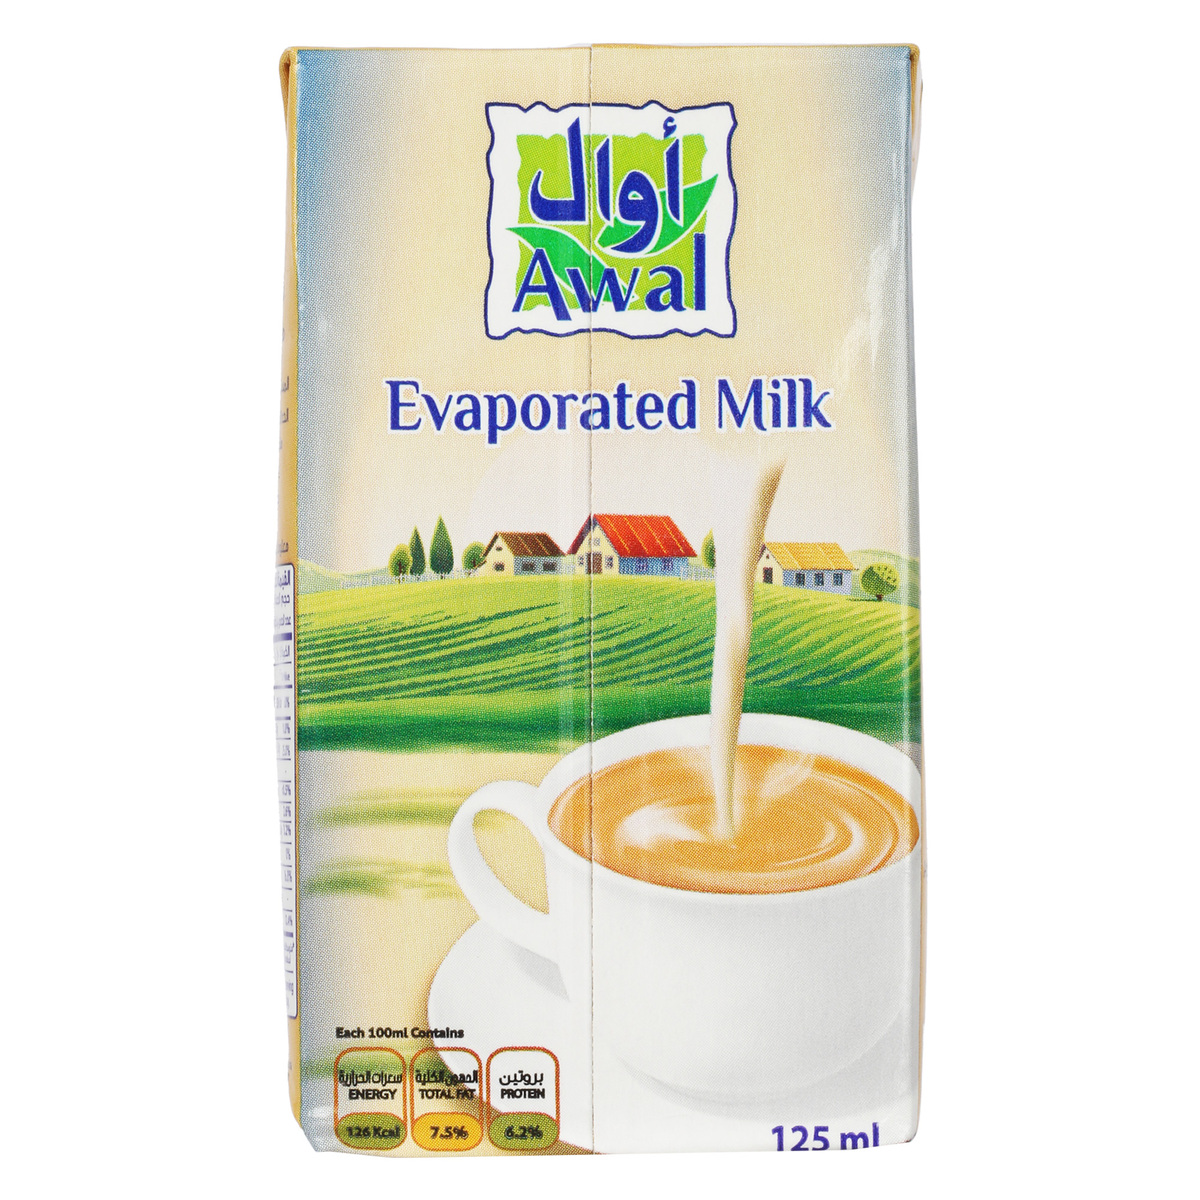 Awal Evaporated Milk 4 x 125ml